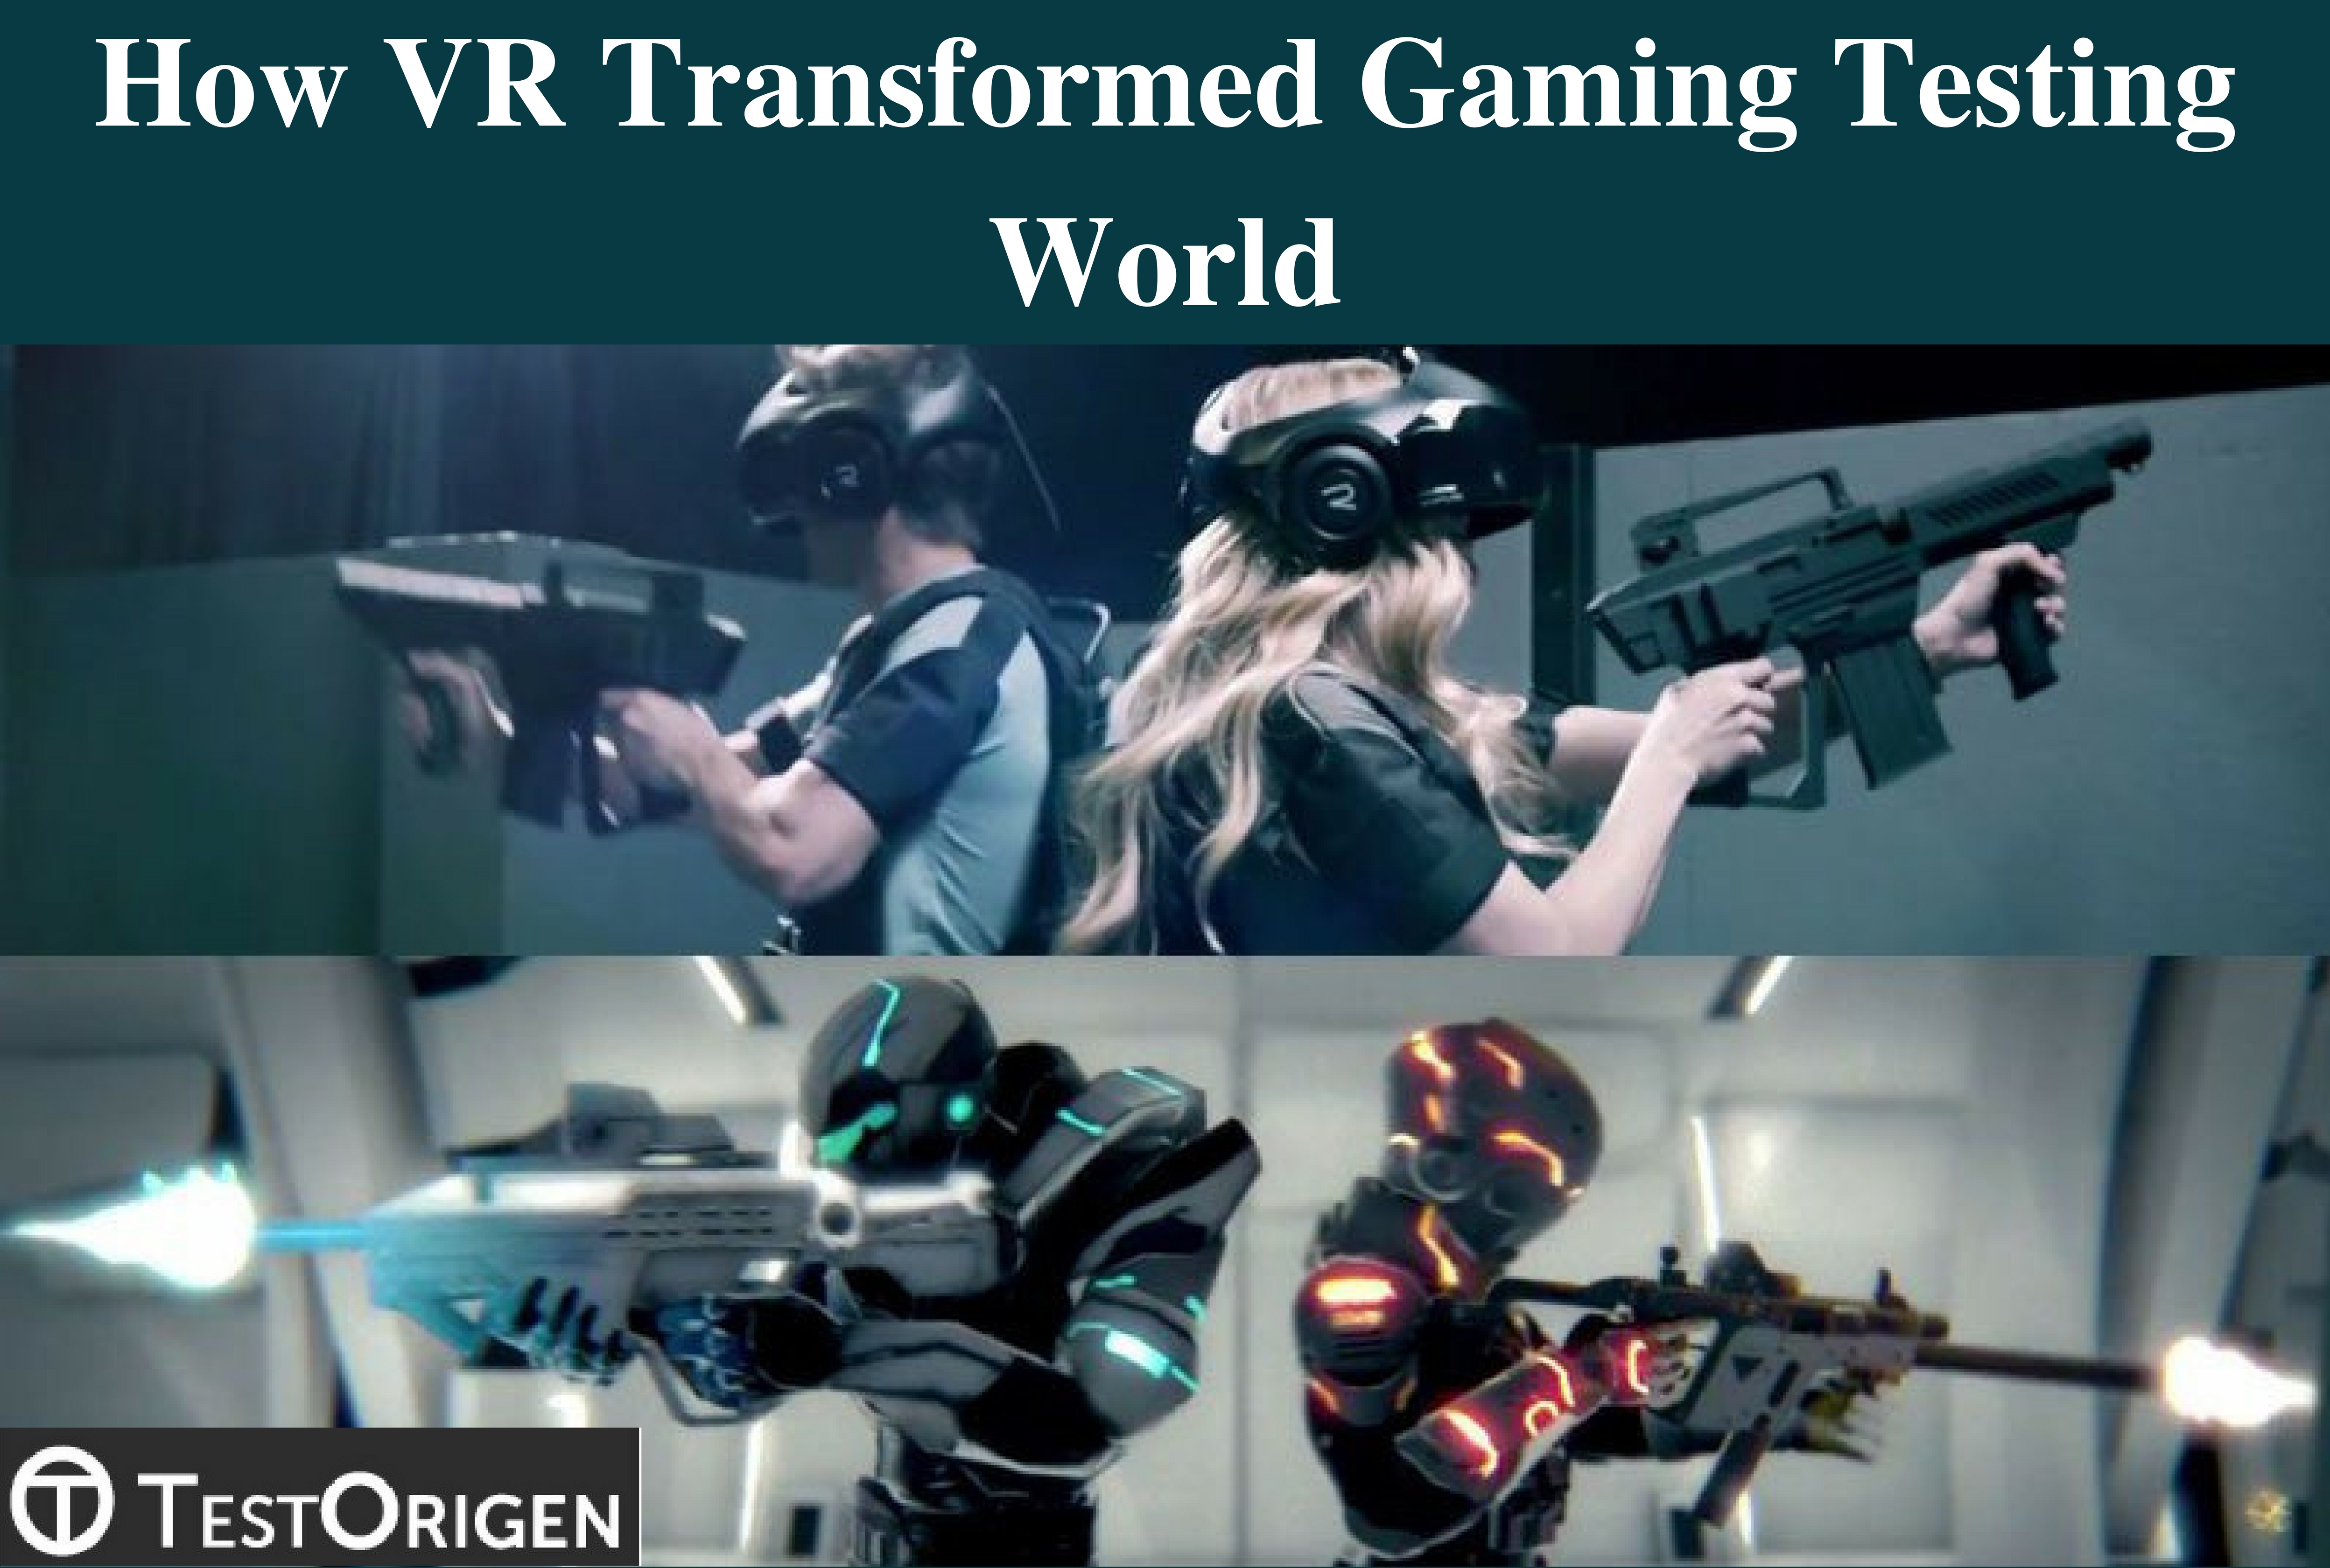 Vr testing. Виртуальная реальность с оружием. Виртуальный мир. Виртуальная реальность арт. Another World виртуальная реальность.